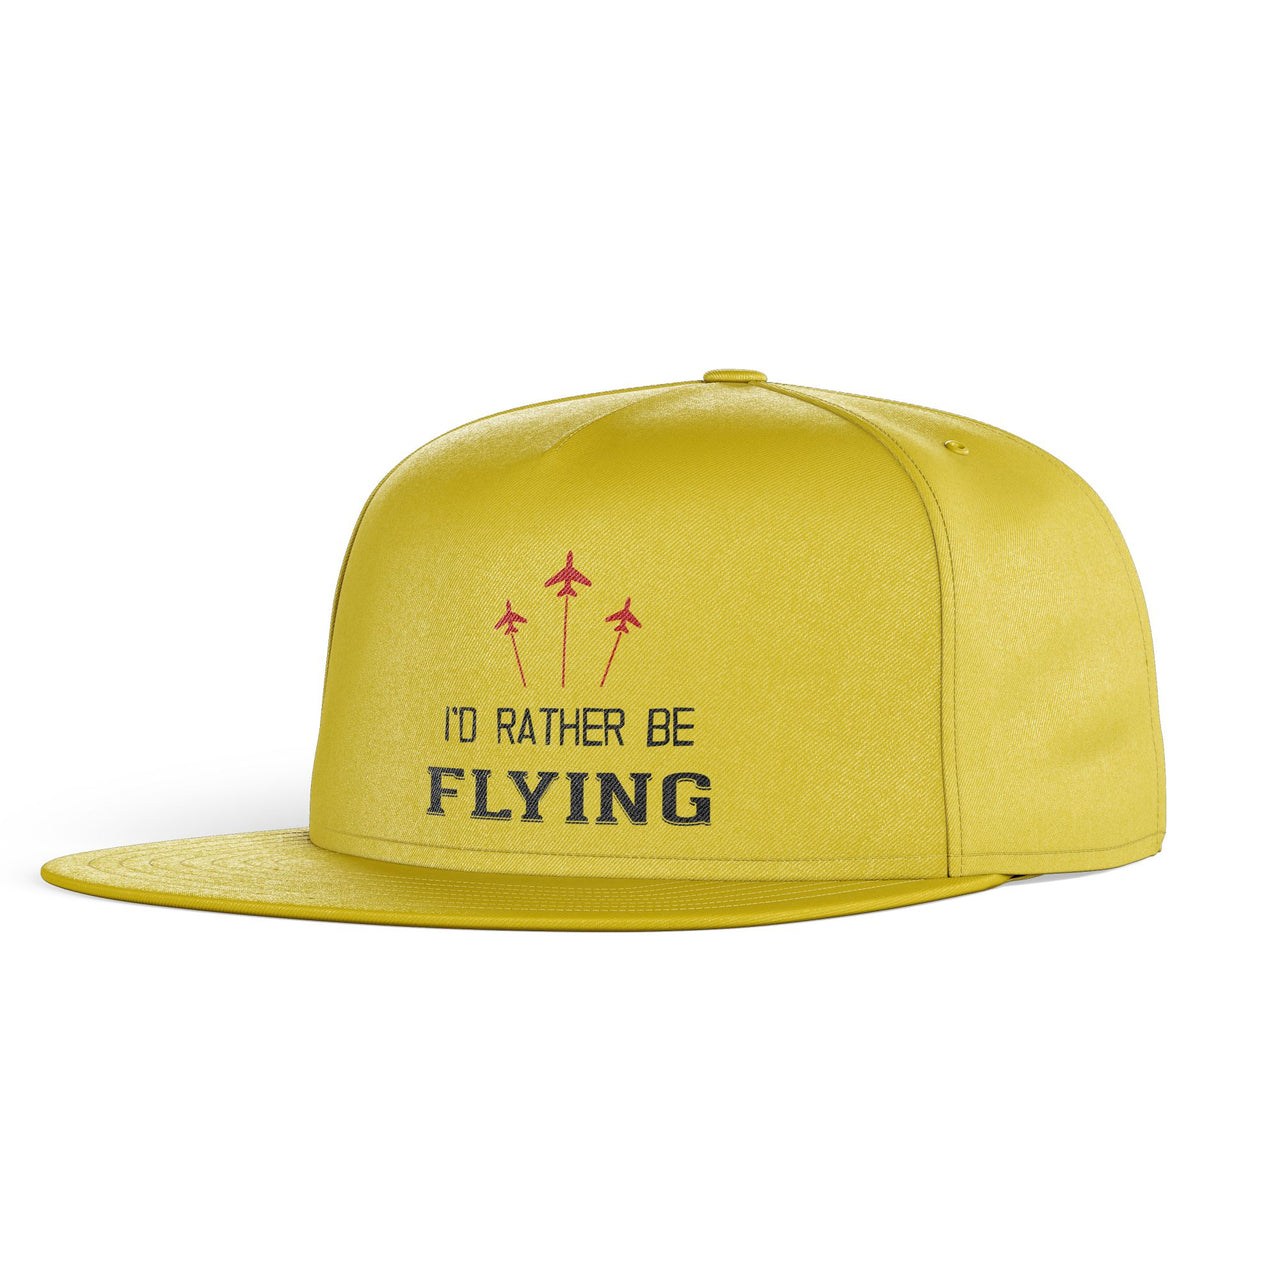 I'D Rather Be Flying Designed Snapback Caps & Hats